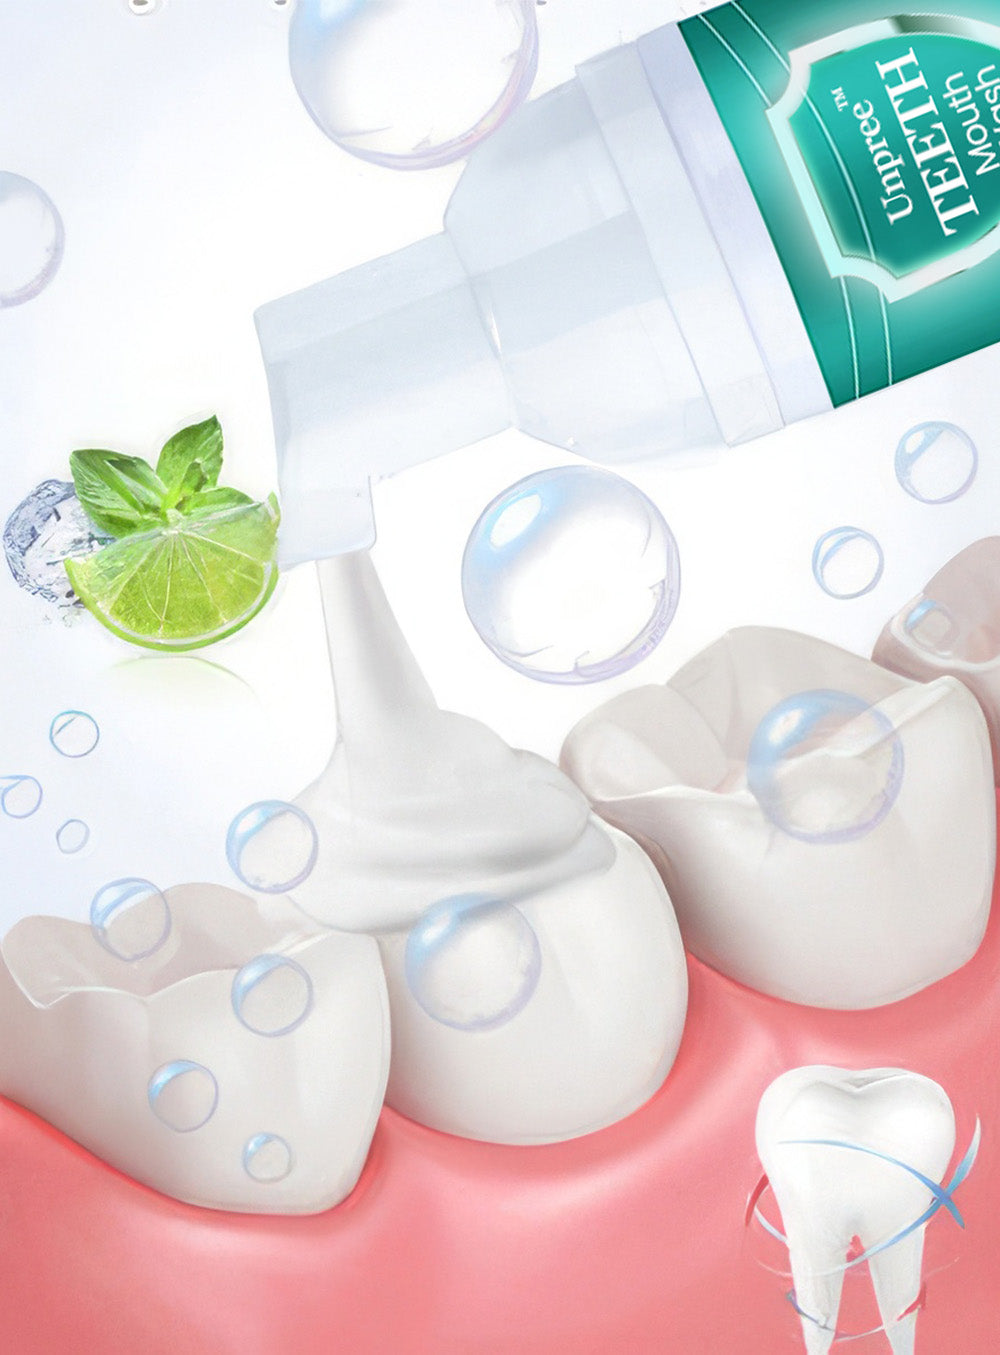 Unpree™ TEETH Mouthwash - Solve all Oral Problems